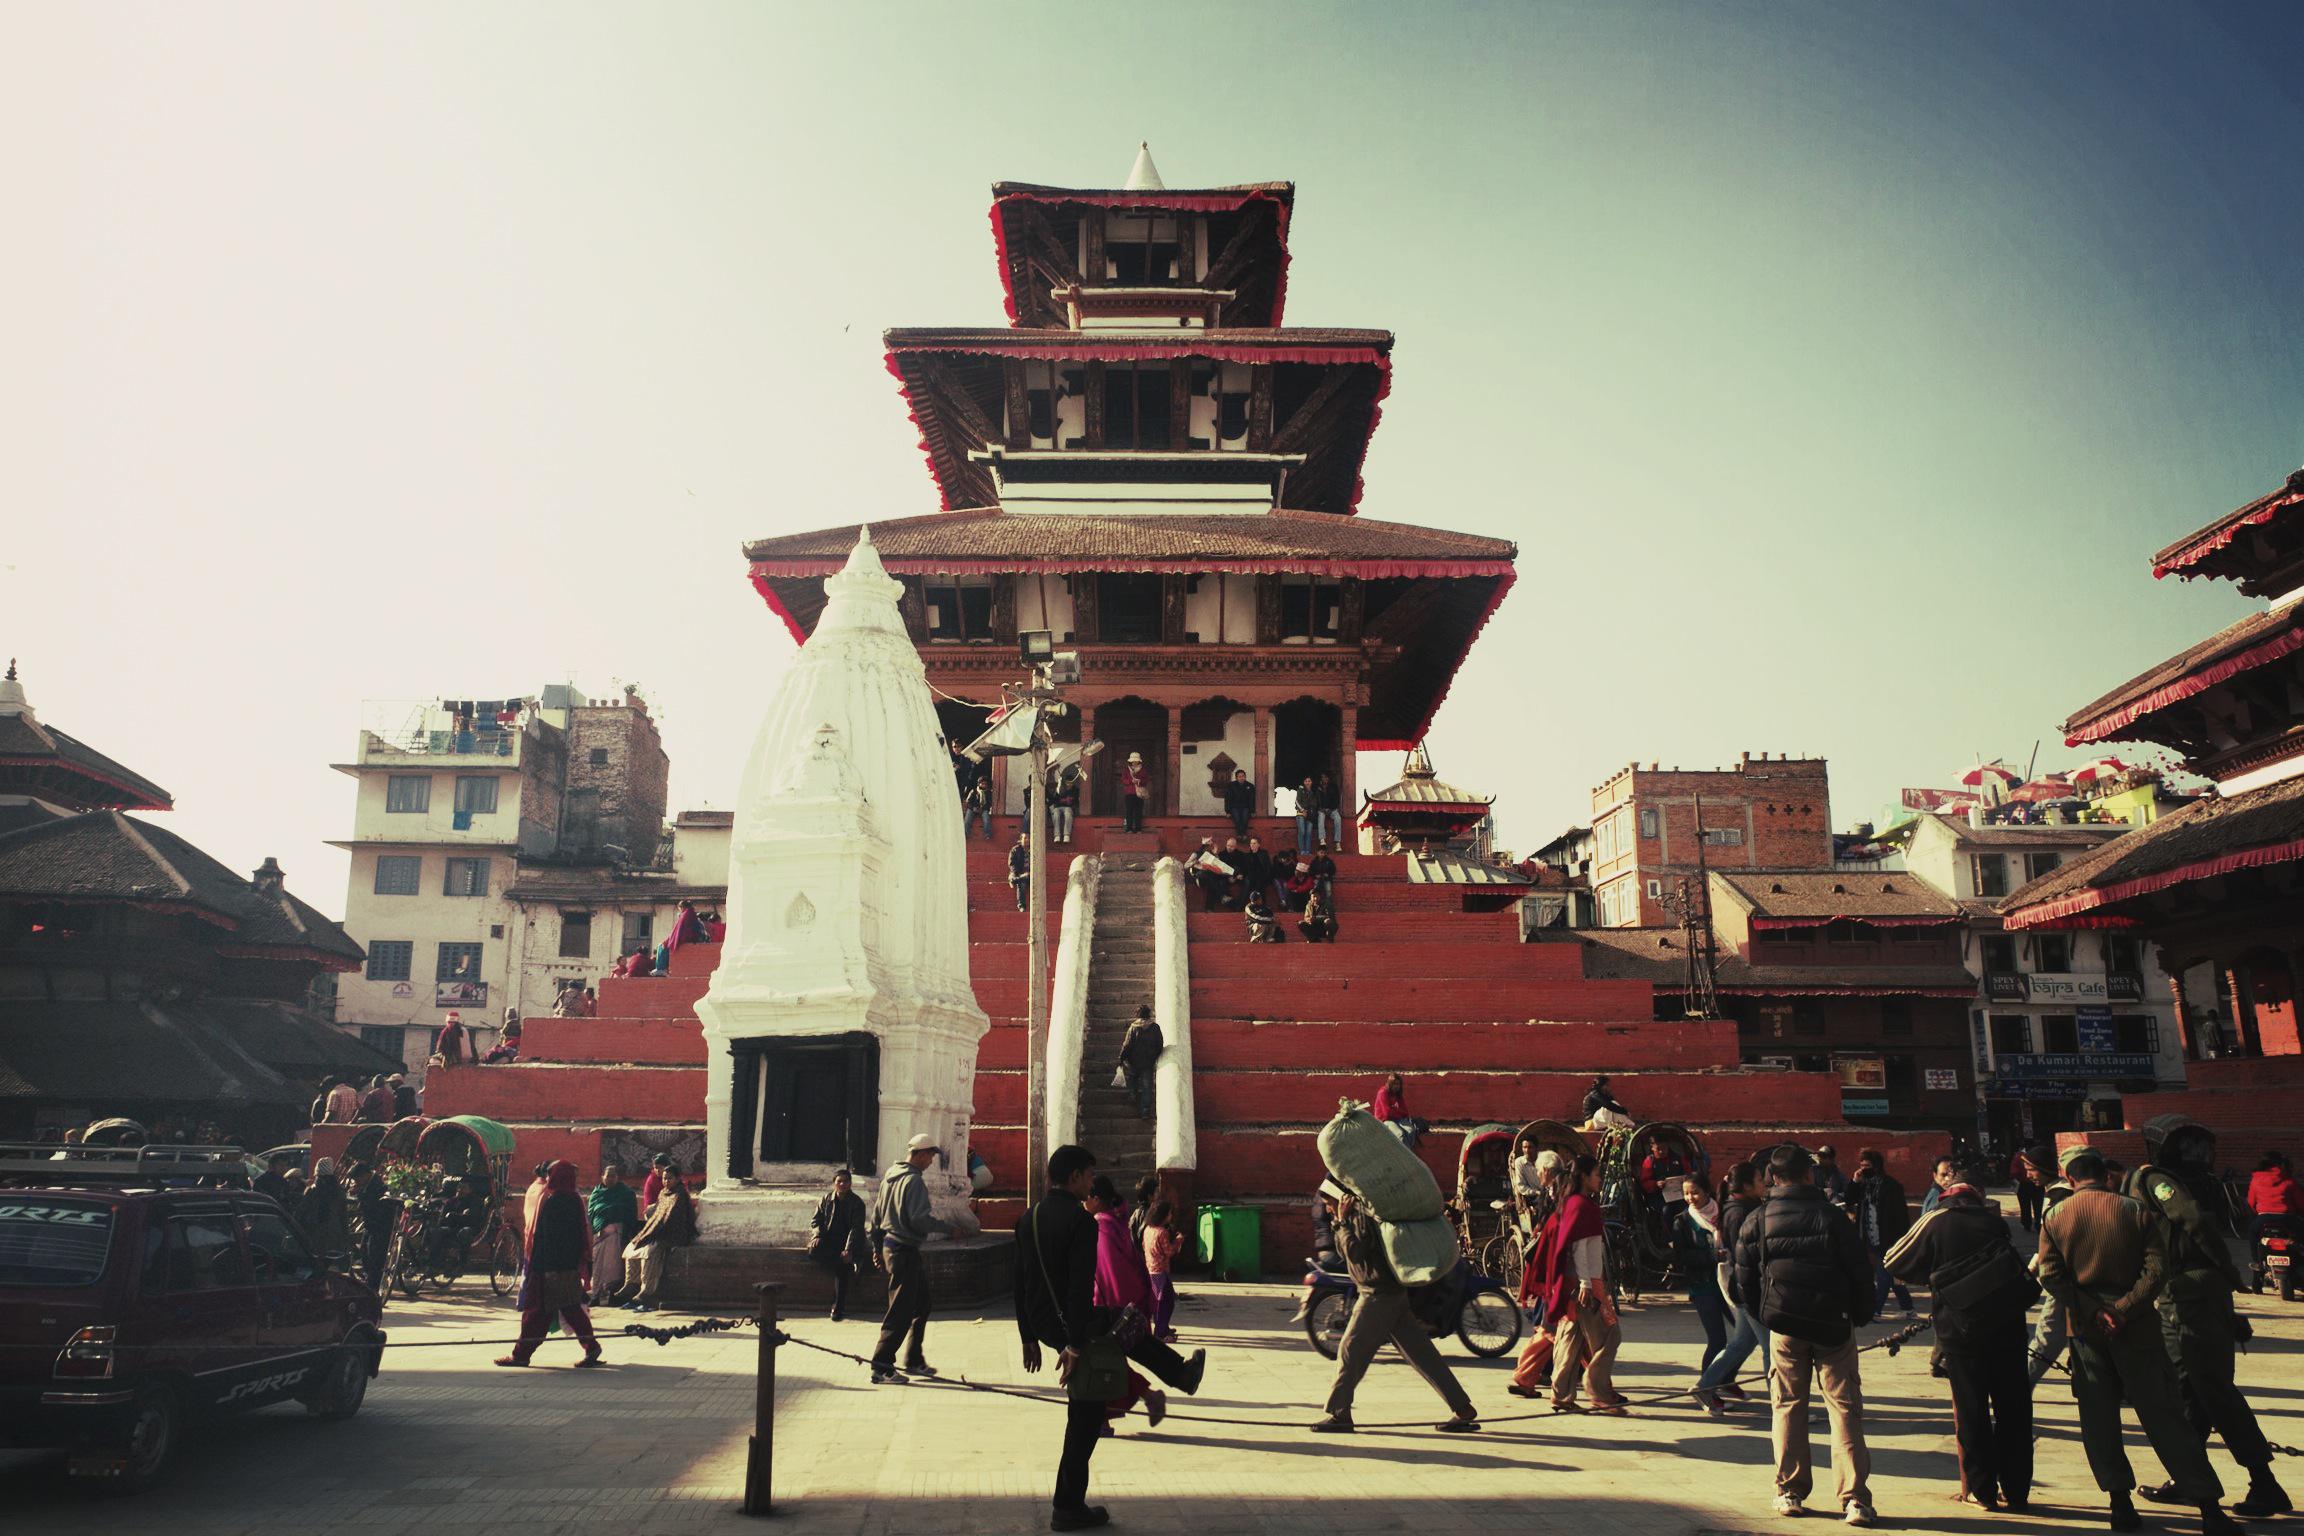 Gallery Nepal - Image 9